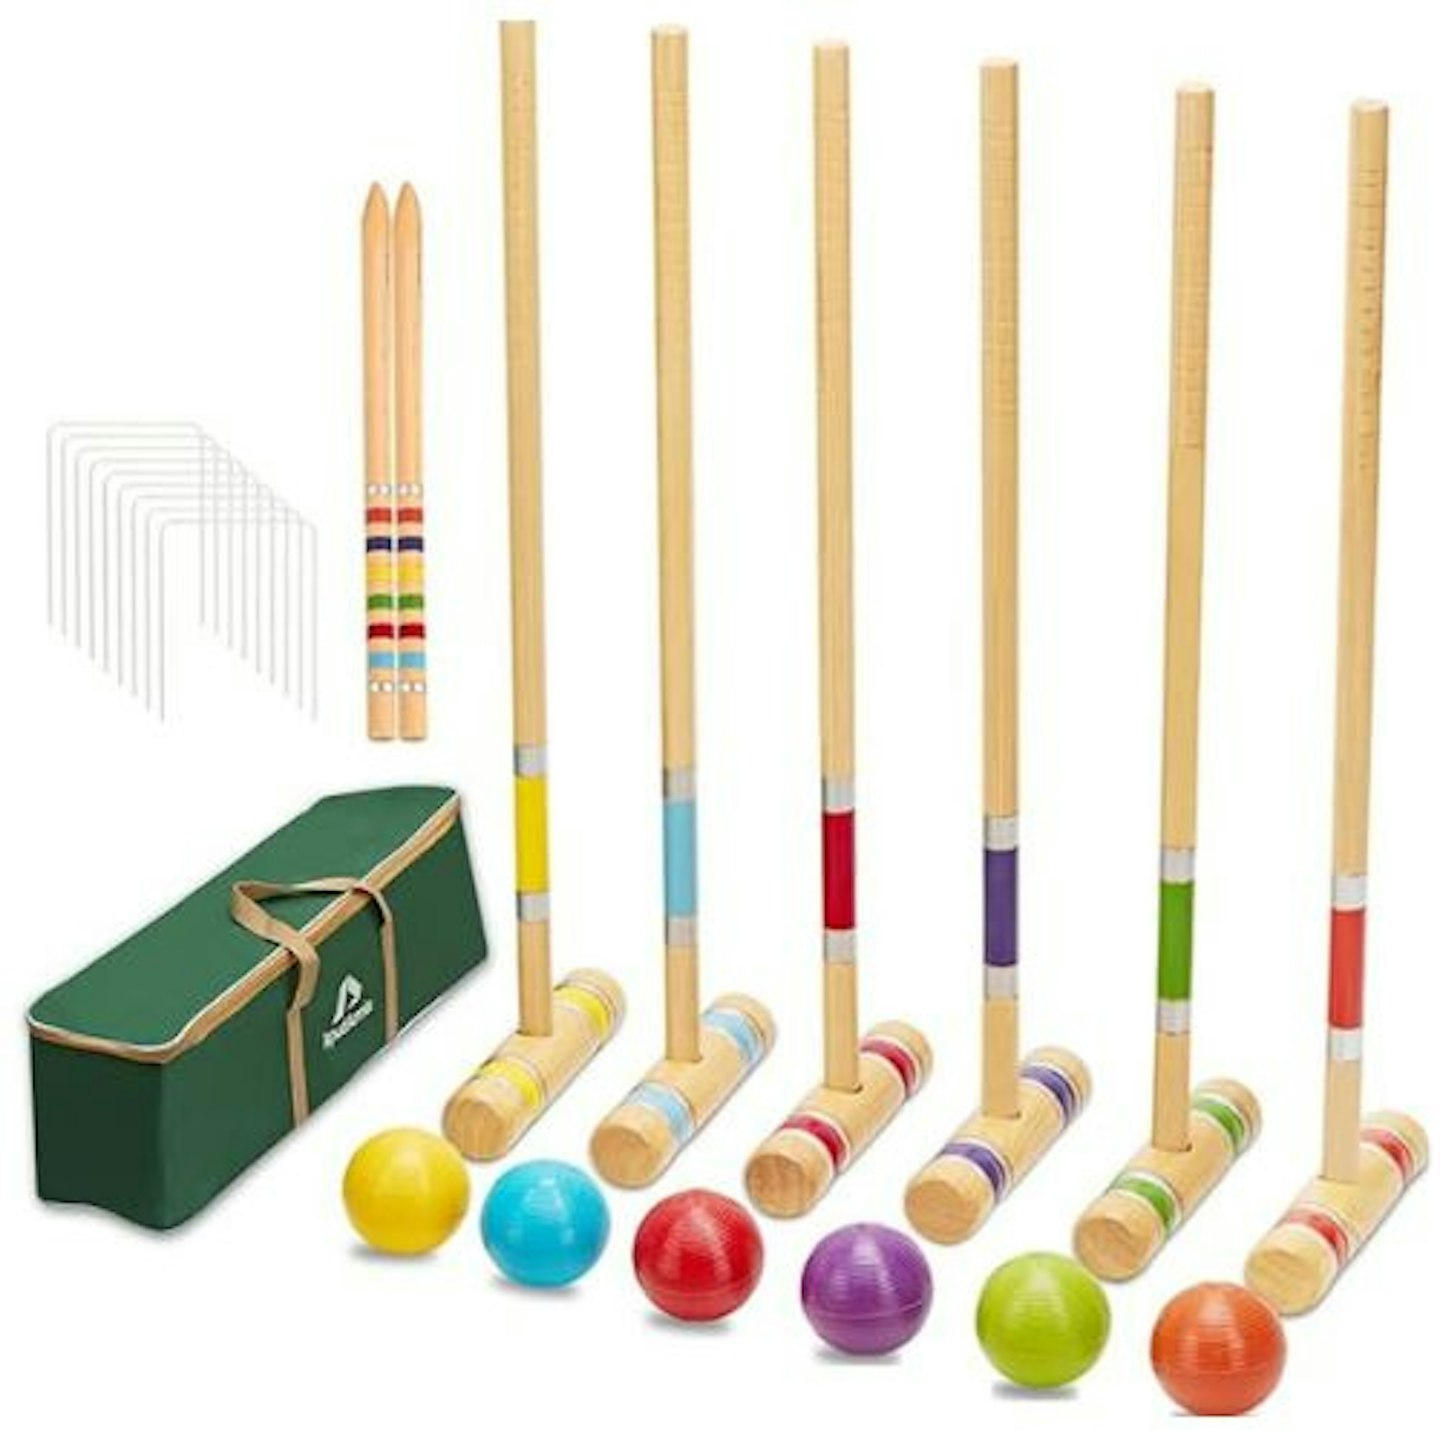 ApudArmis Six Player Croquet Set